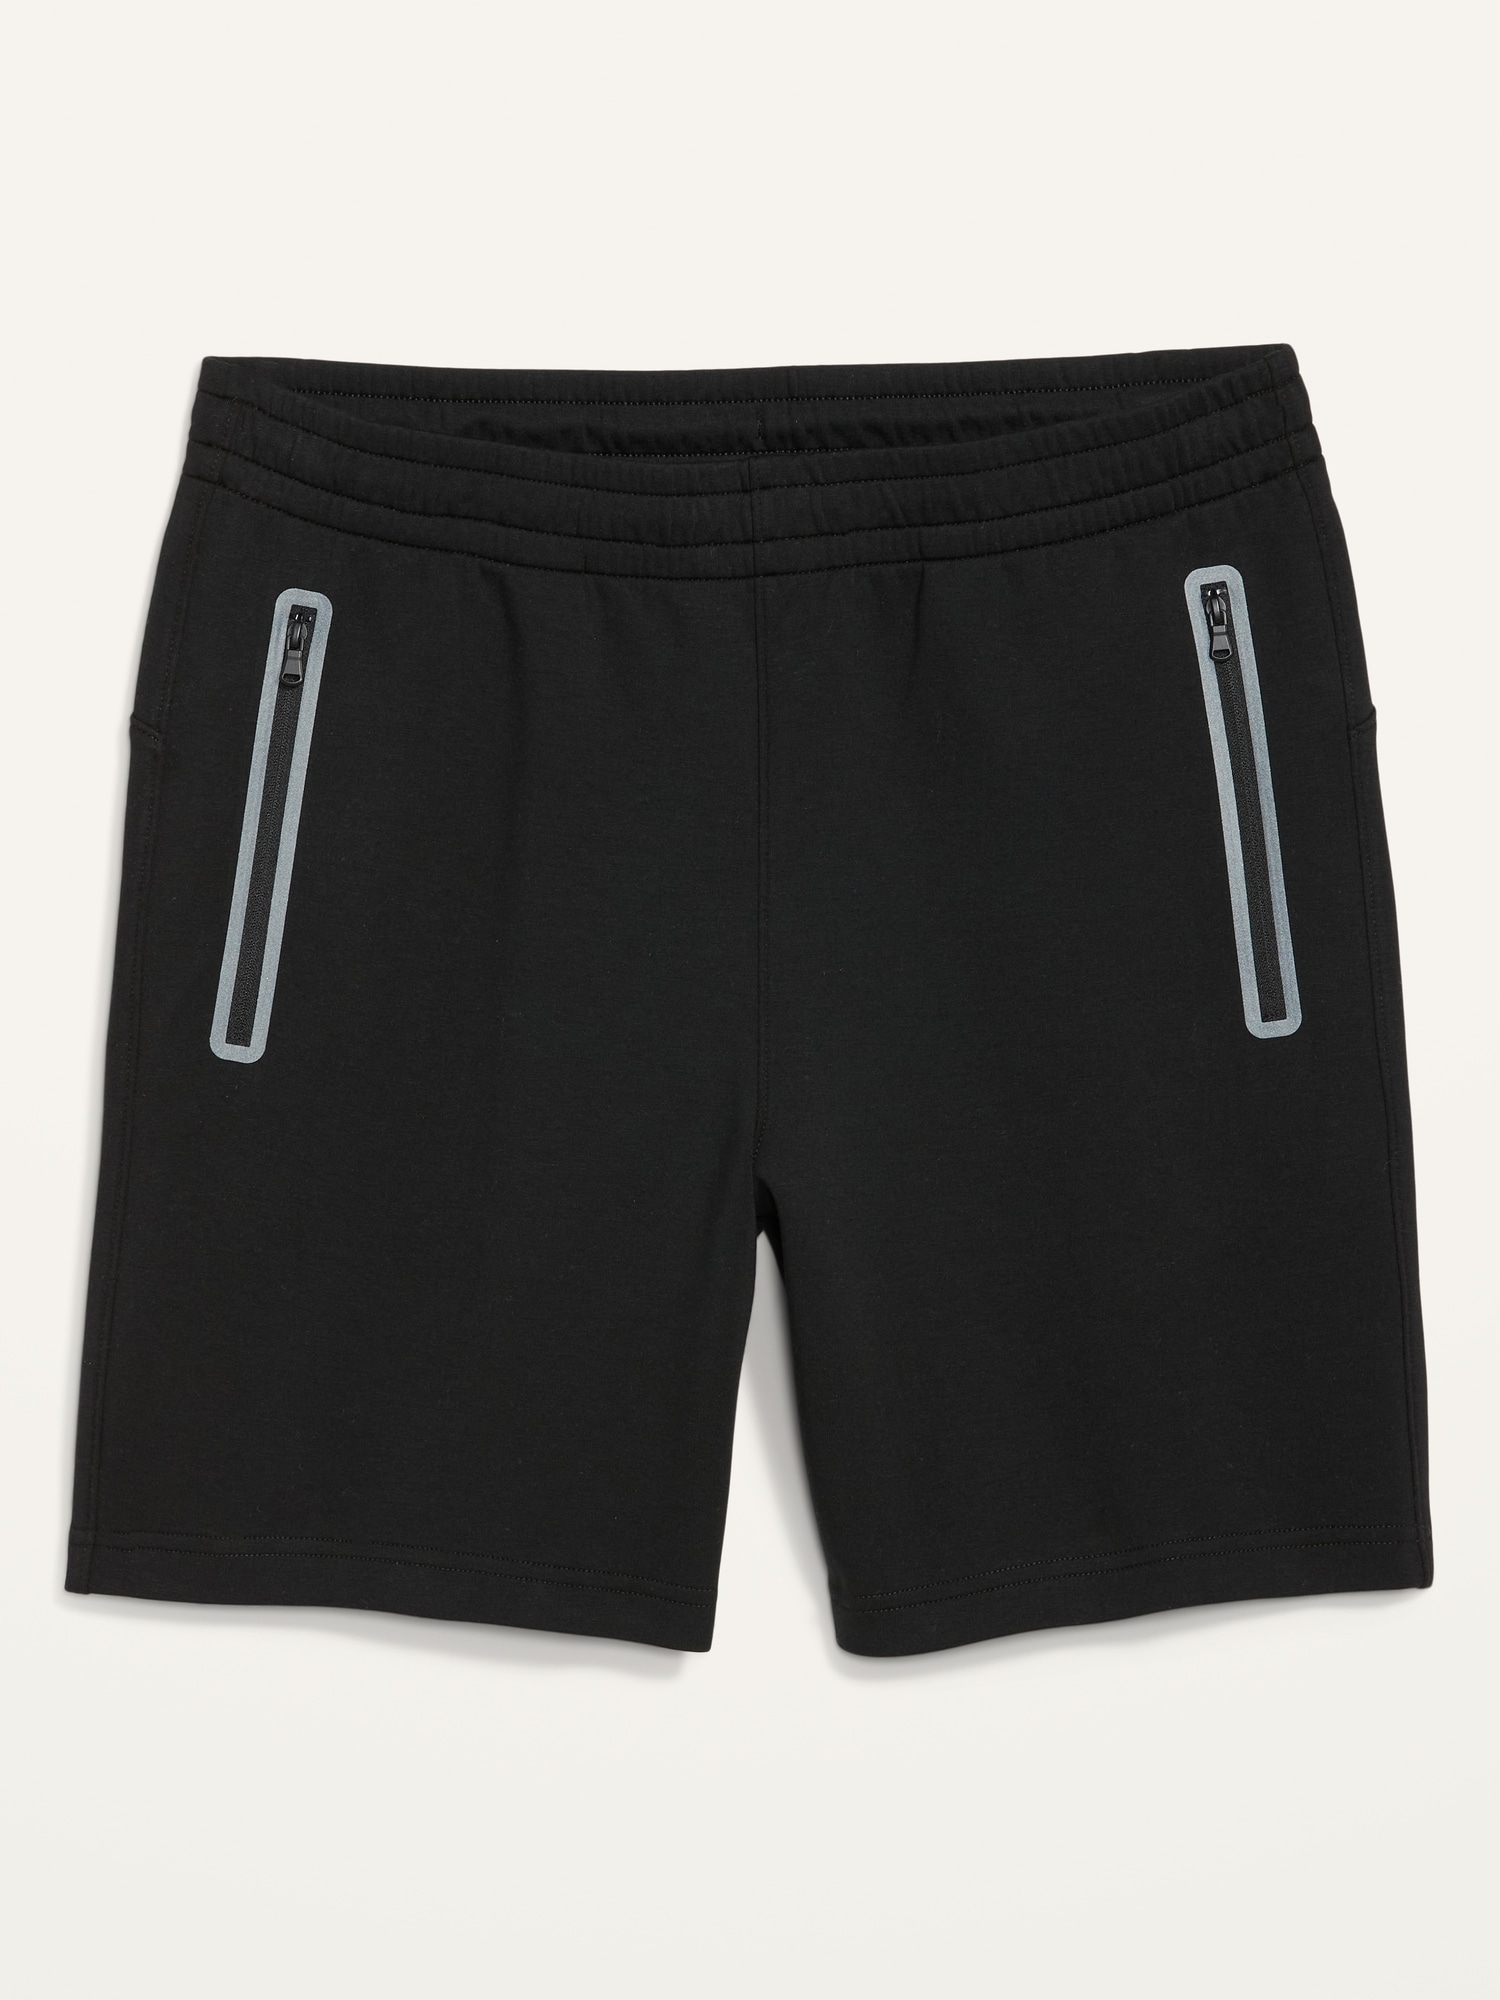 Dynamic Fleece Sweat Shorts for Men --7-inch inseam | Old Navy